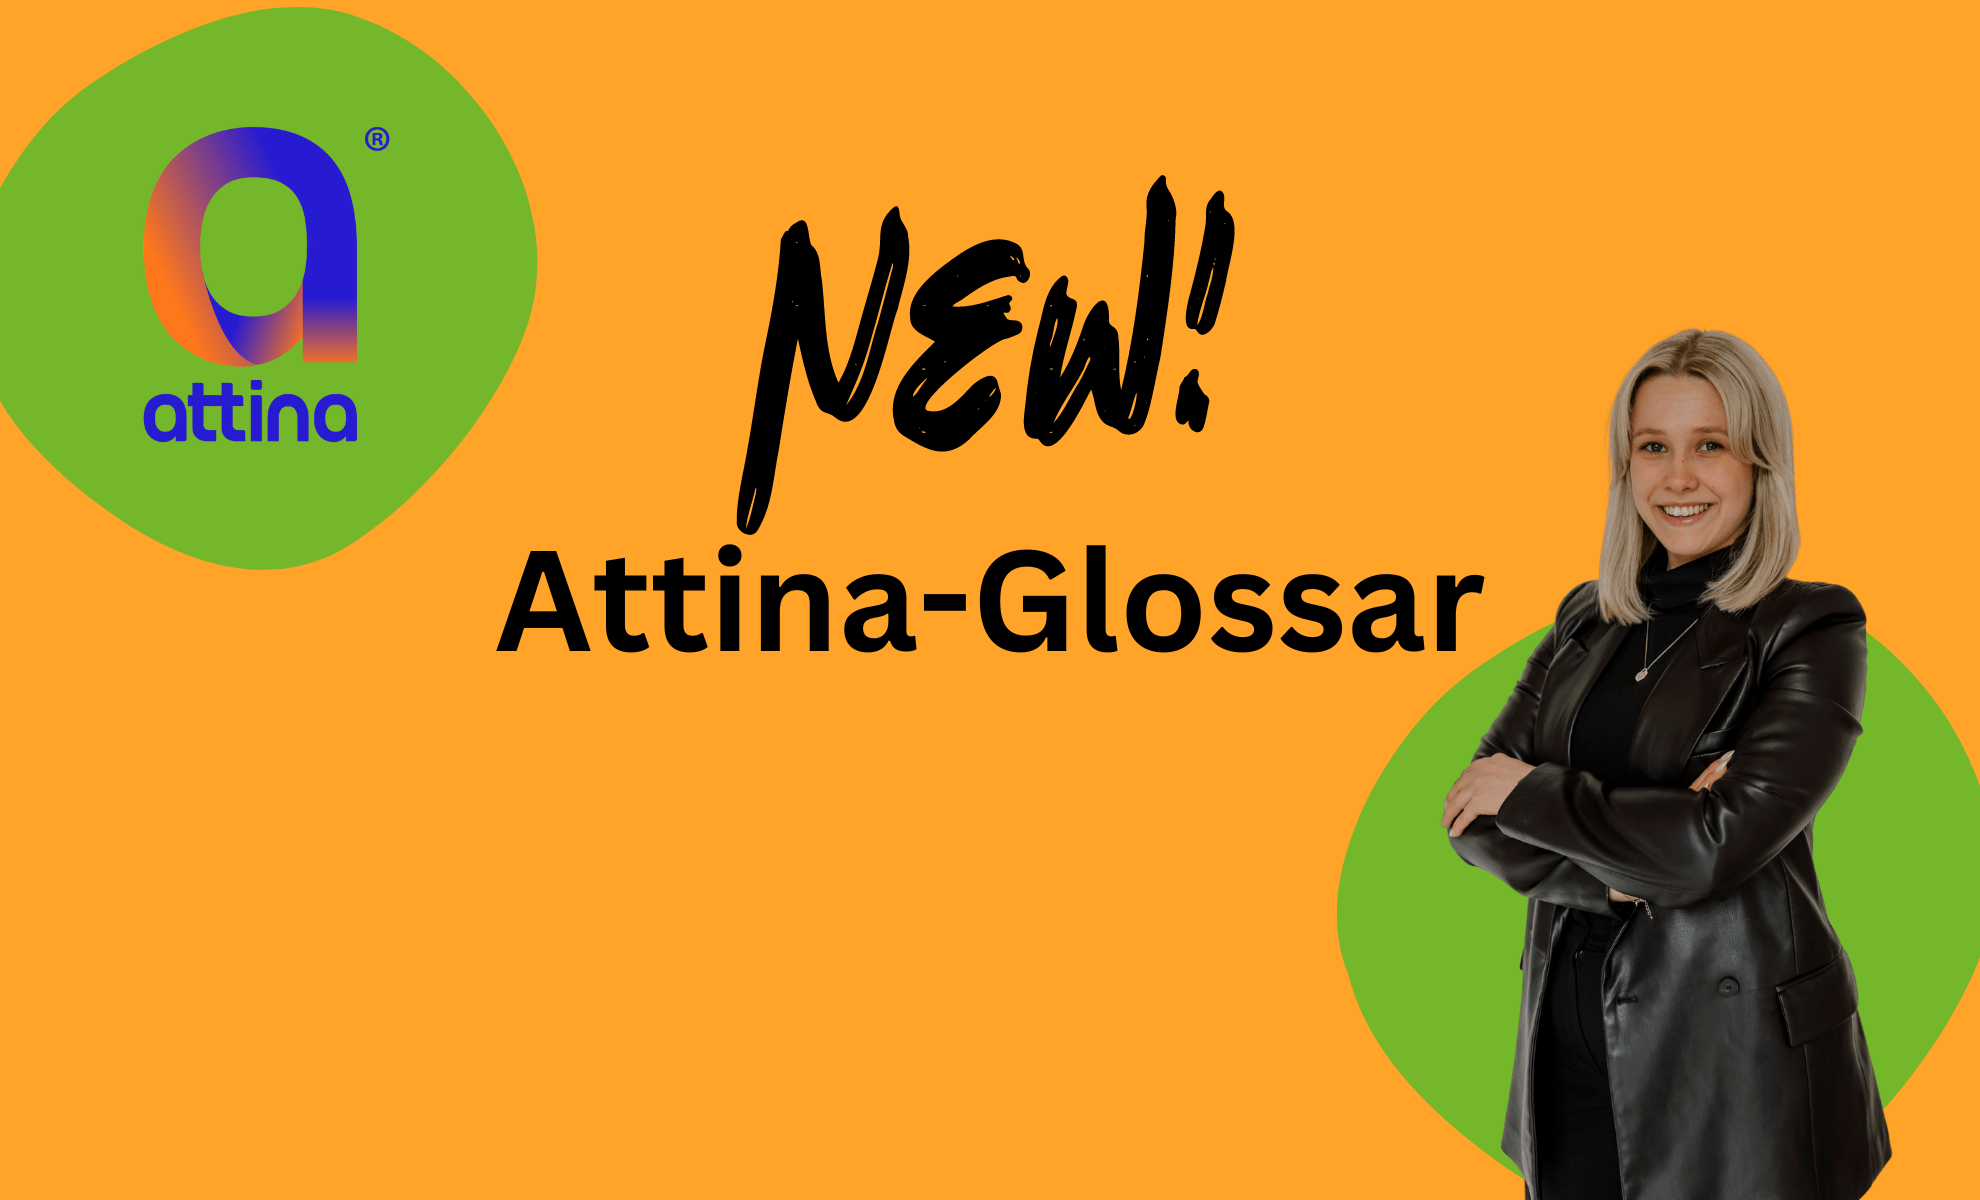 Attina Glossar